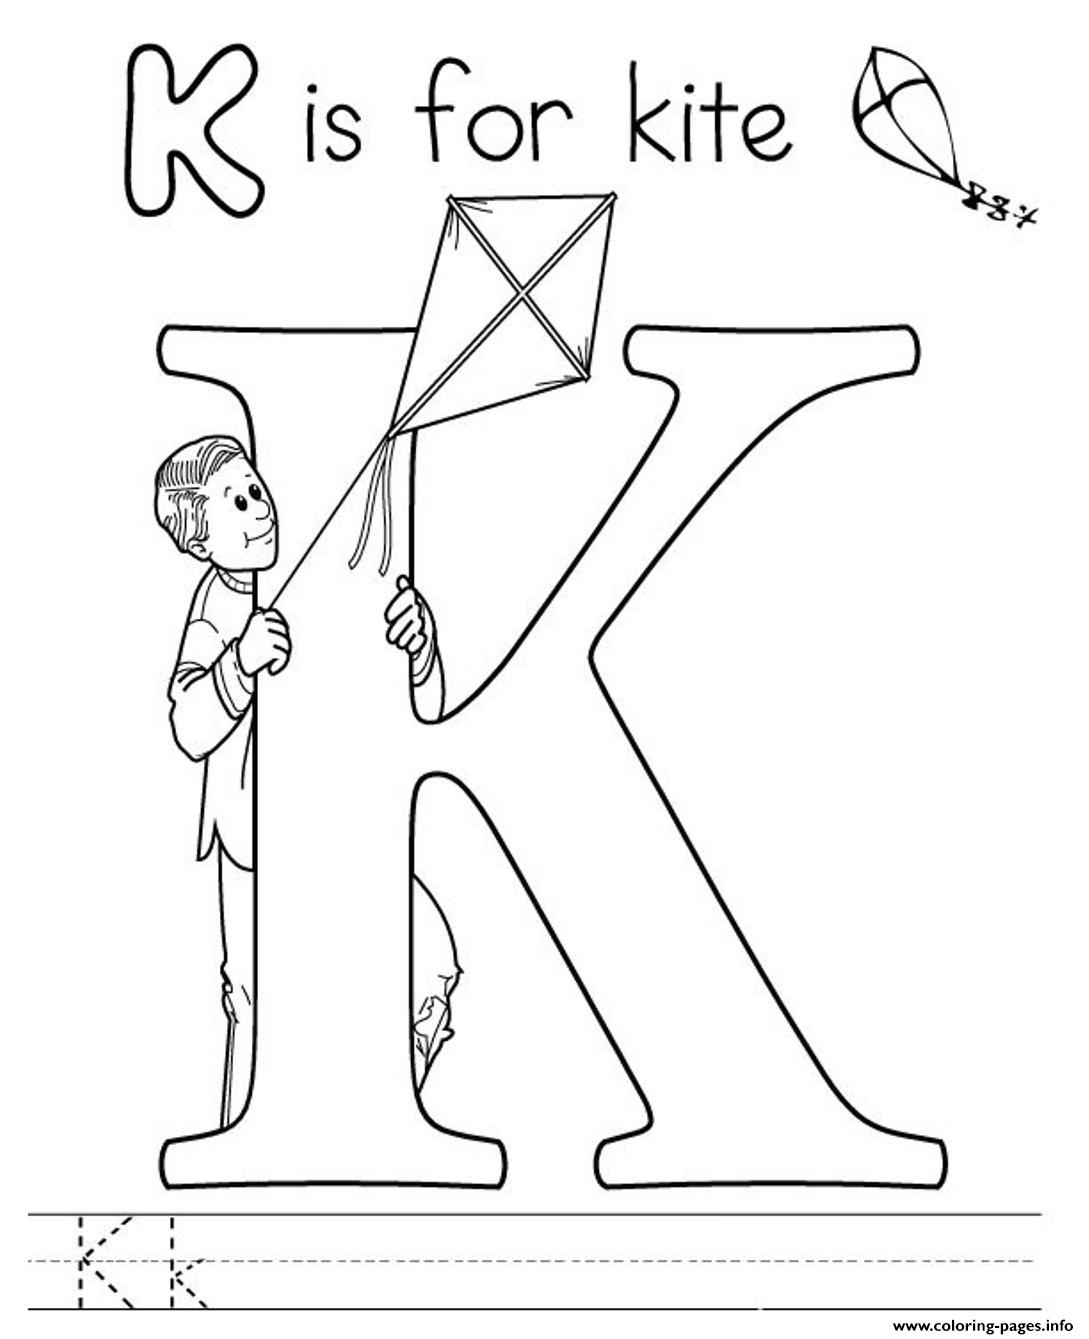 Alphabet S Free Kids Play Kite7b45 coloring